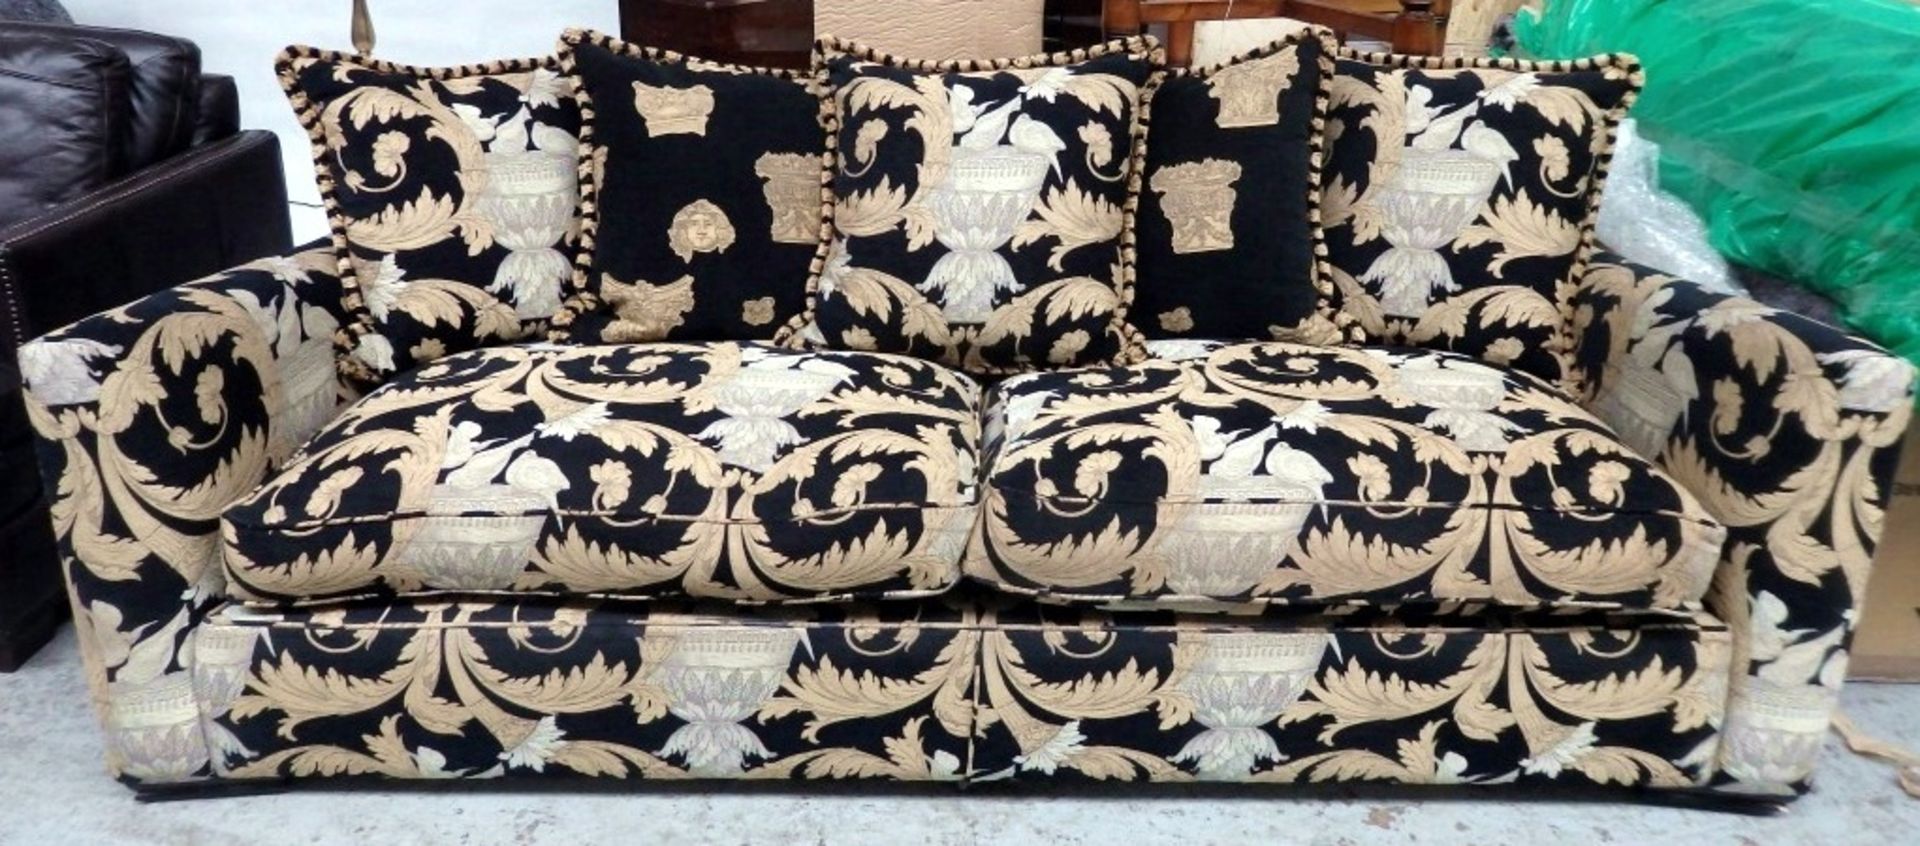 1 x DURESTA Premium "Trafalgar" Grande Sofa - Features A Versace-style Design in Black -